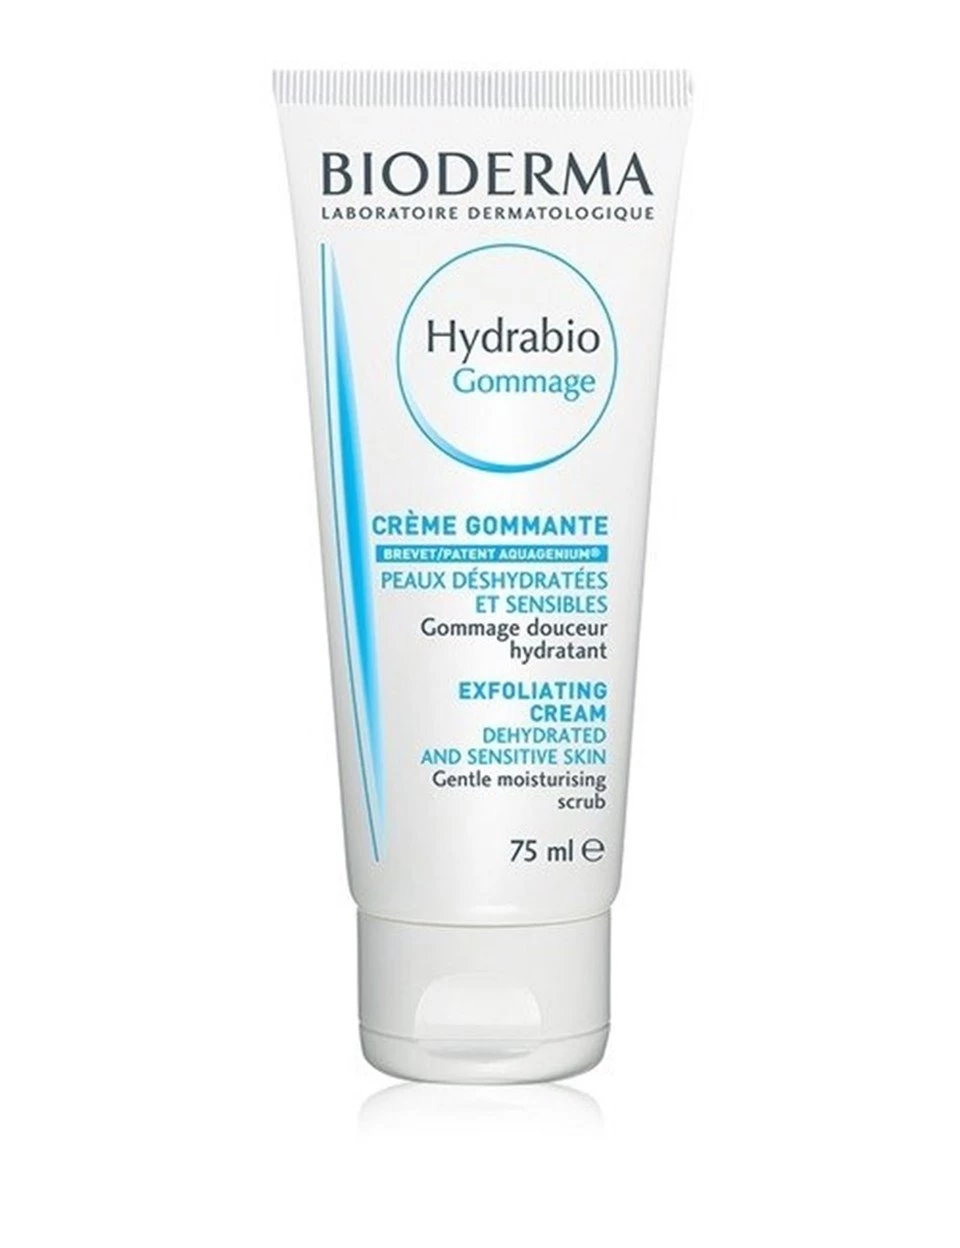 Bioderma Hydrabio Exfoliating Cream 75 ml